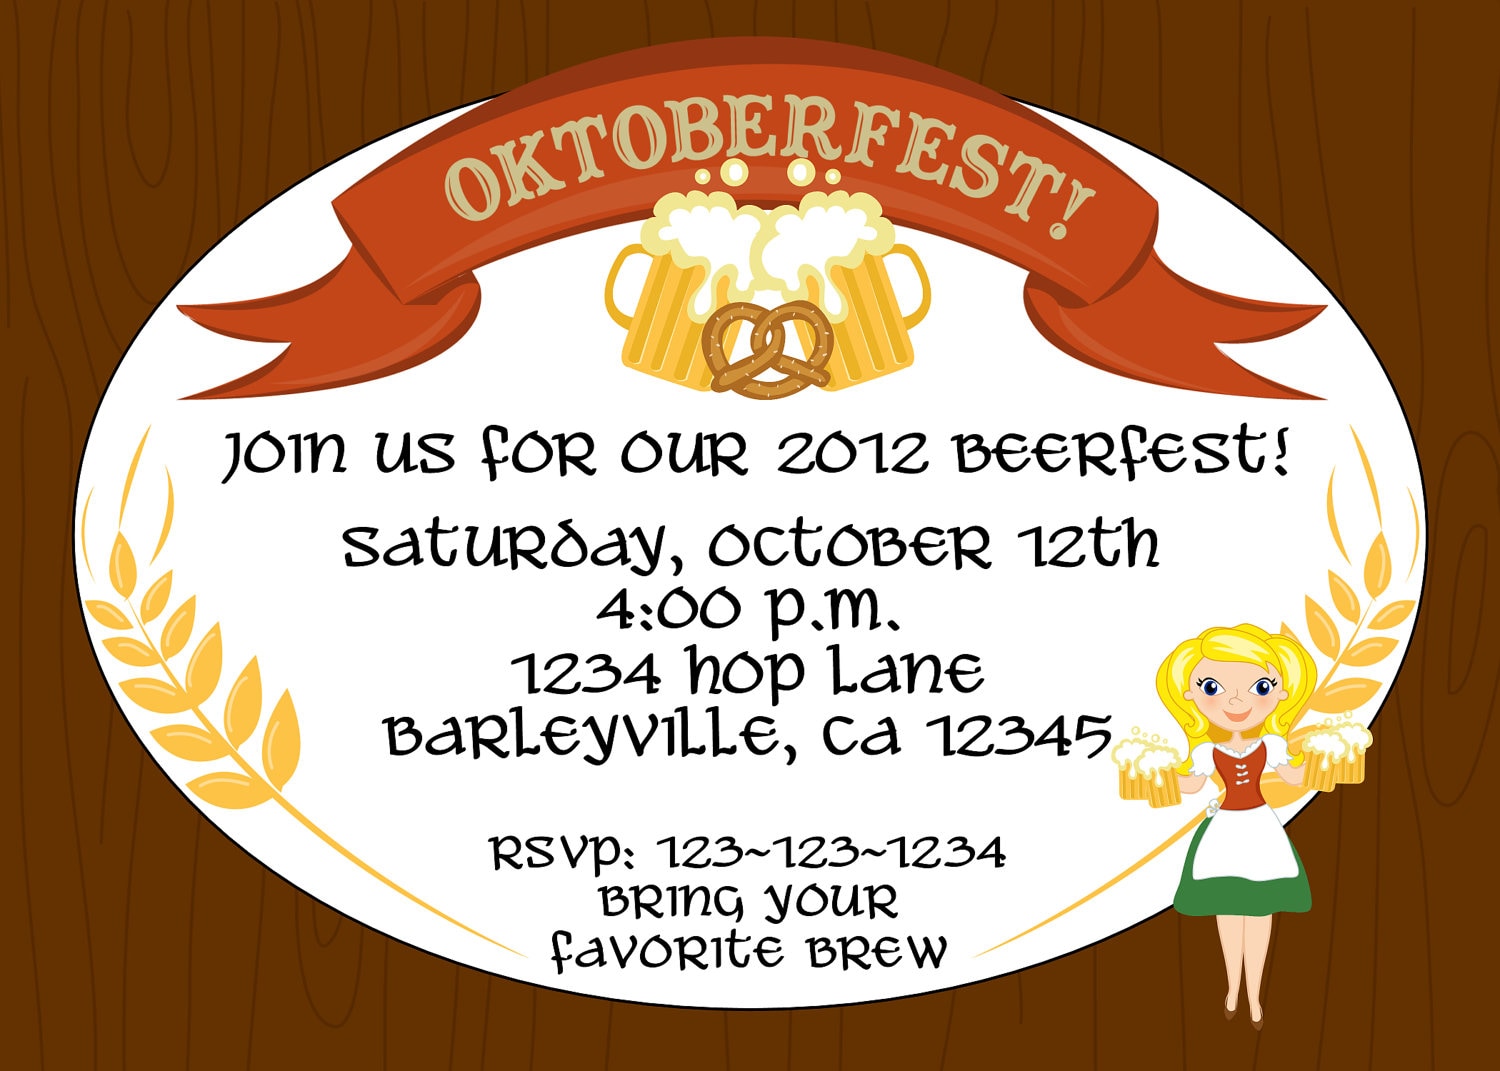 Oktoberfest Beerfest Invitation or Birthday Party Print Your